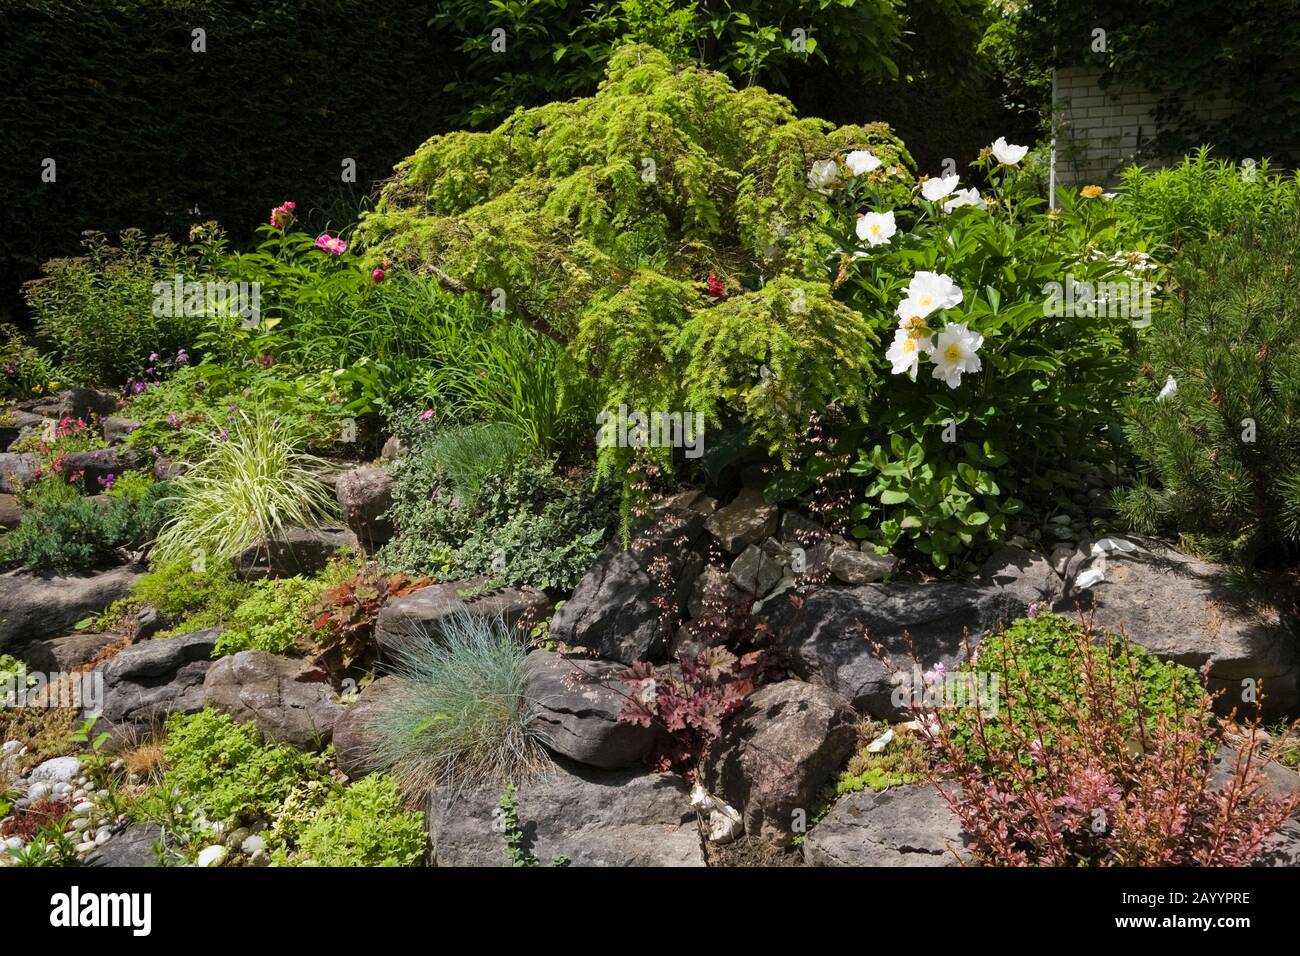 Rock edged border with  Berberis - Barberry shrub, white Paeonia - Peony flowers, Echeveria - Succulent plants, Festuca glauca 'Elijah Blue' - Fescue. Stock Photo